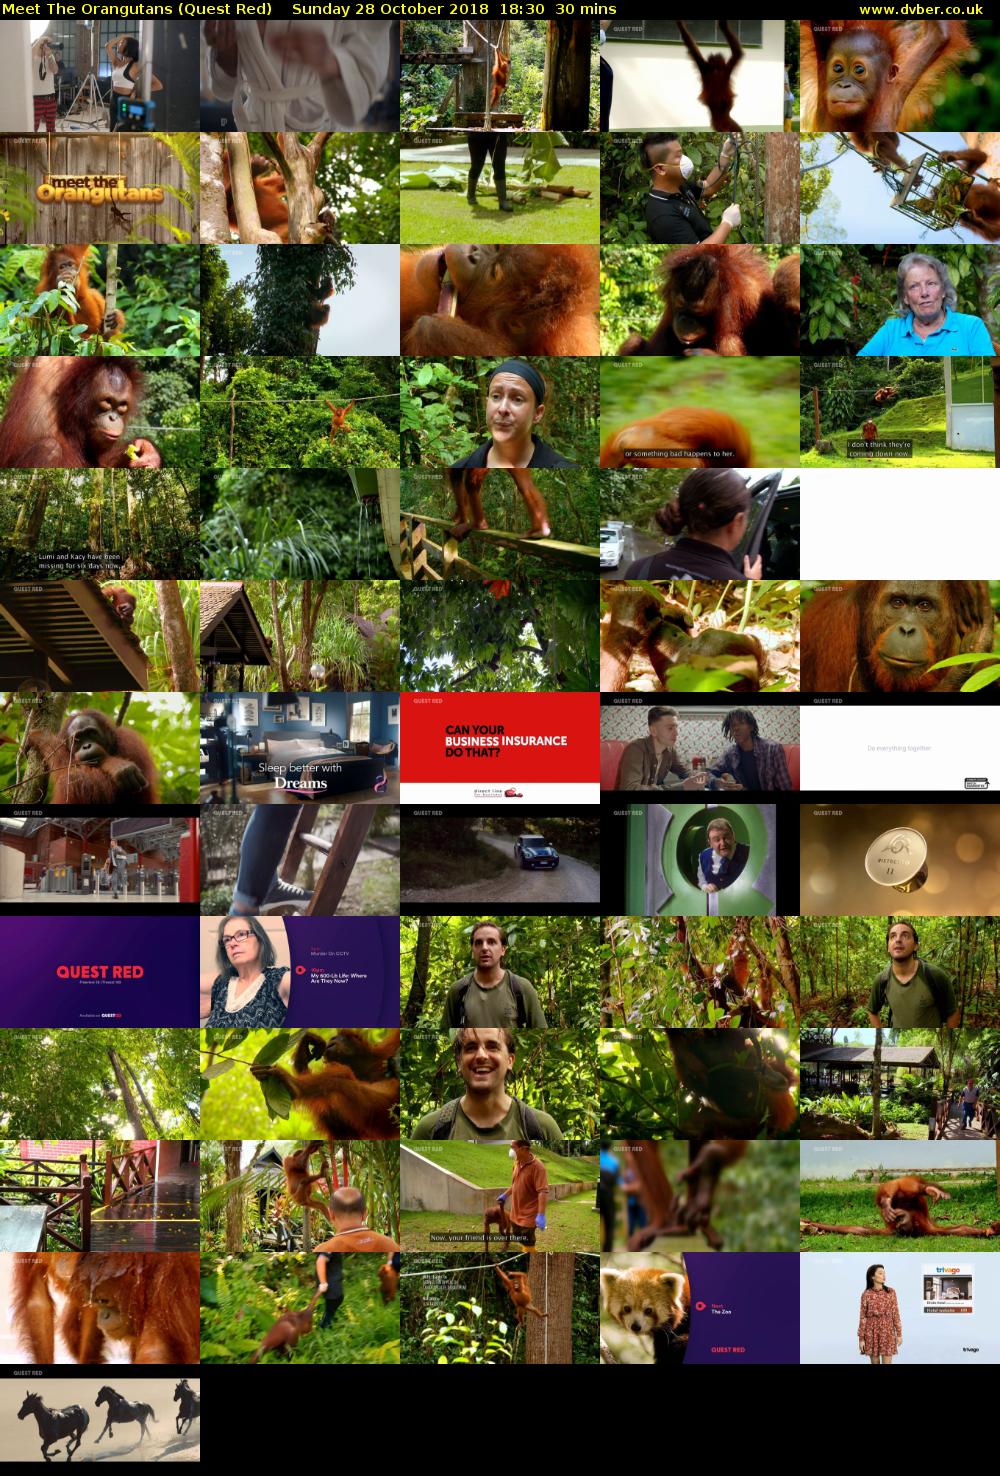 Meet The Orangutans (Quest Red) Sunday 28 October 2018 18:30 - 19:00